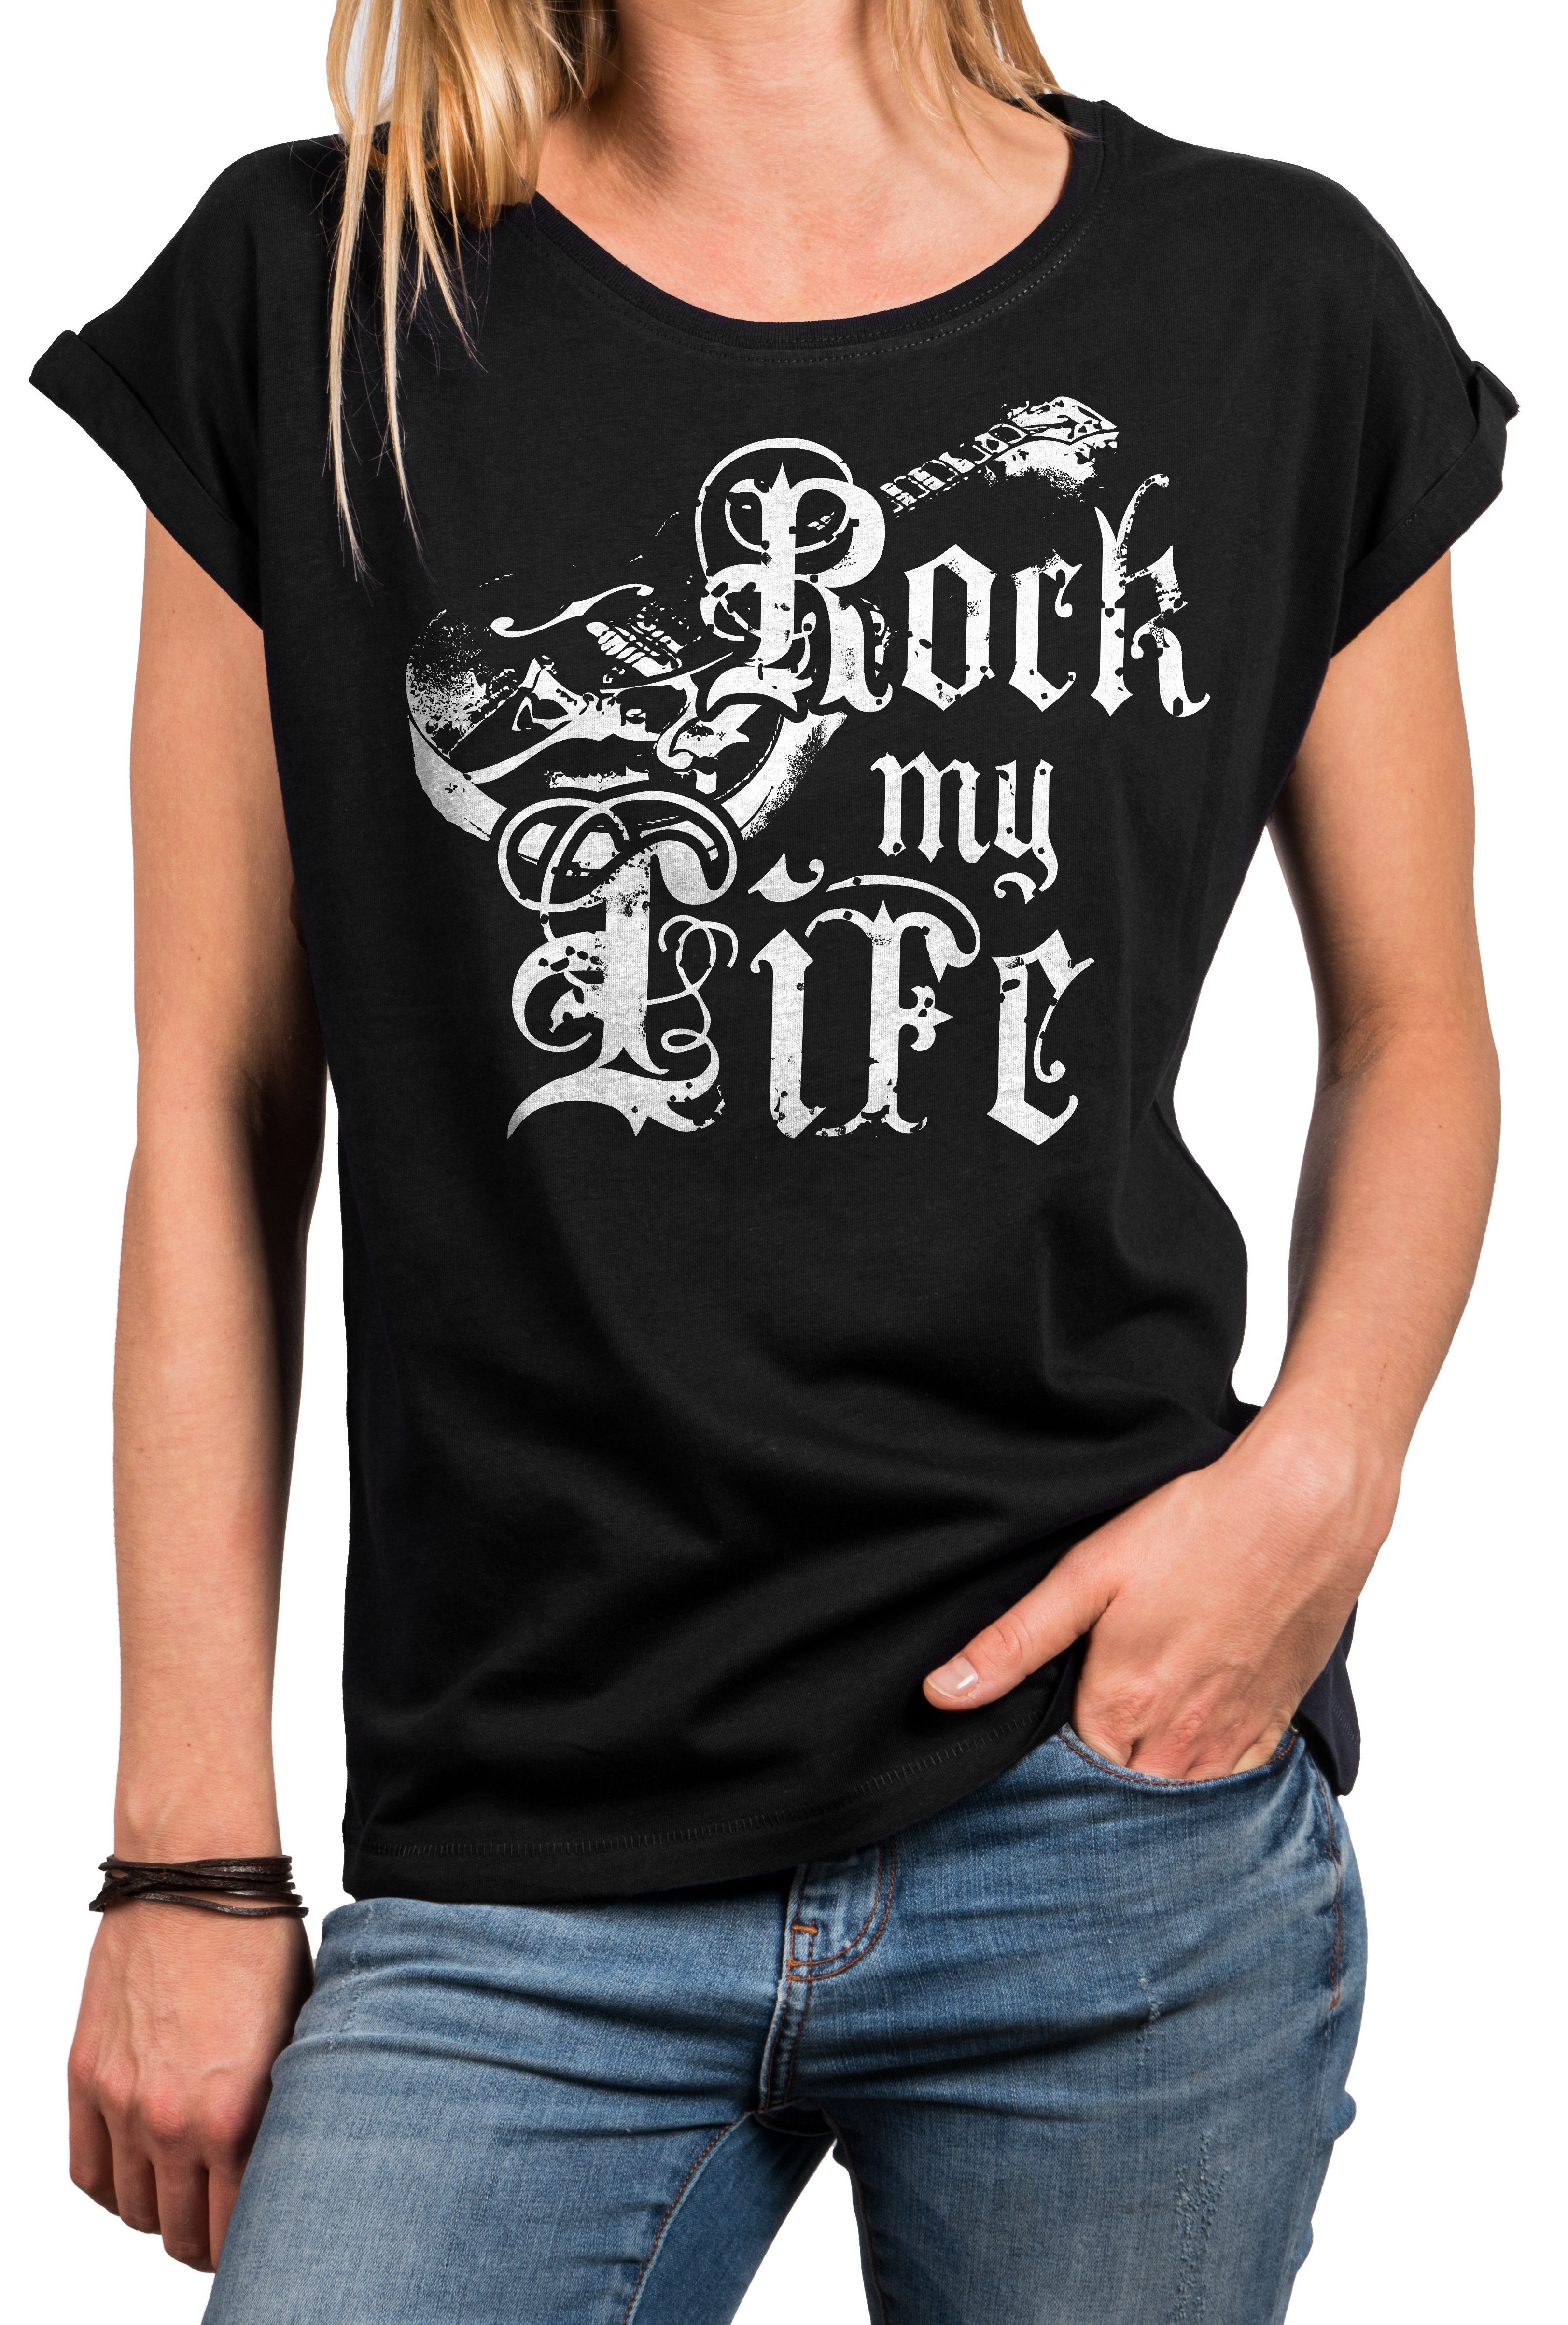 MAKAYA Print-Shirt Ausgefallene Футболки Damen lässige Oberteile Top Gitarrenmotiv Tunika (Rock Band Motiv, schwarz, grau, rosa, blau) Baumwolle, große Größen